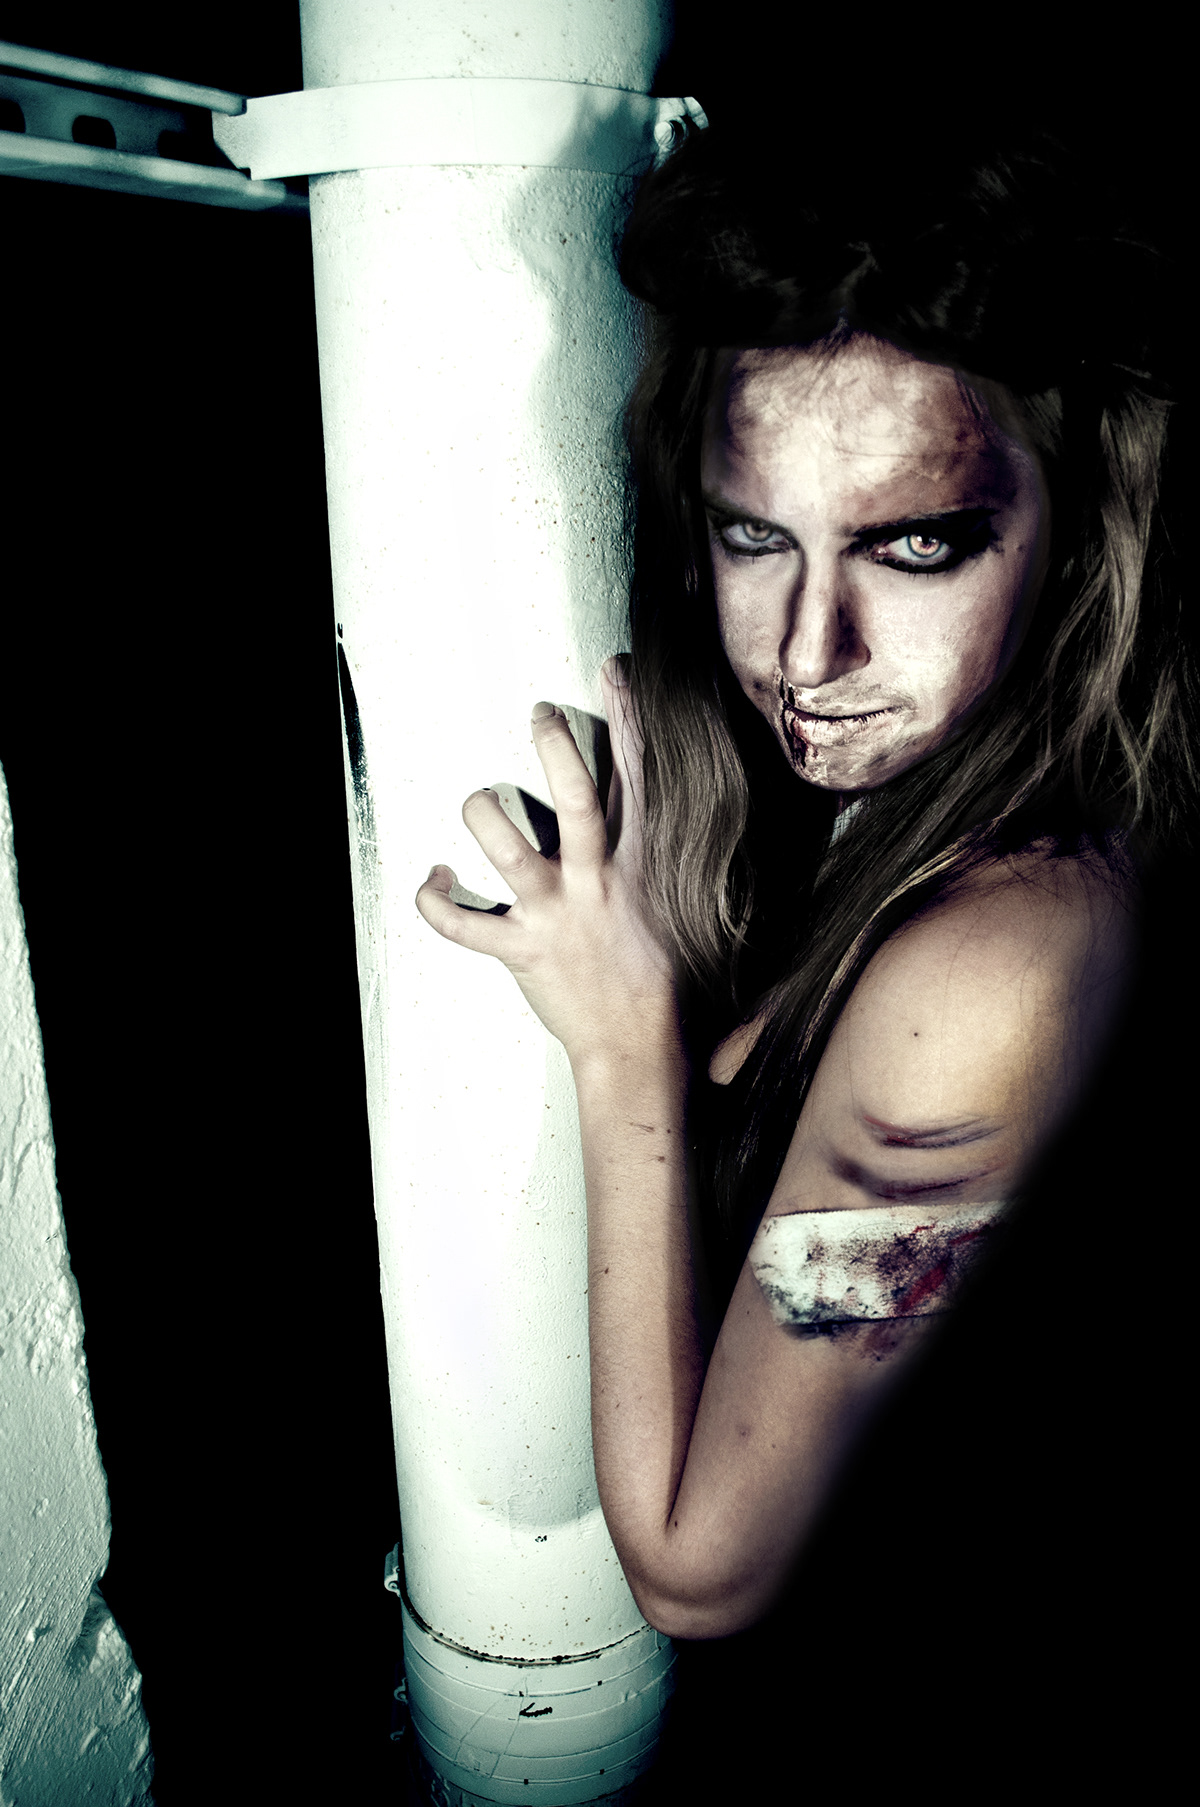 horror makeup spooky Halloween dead zombie dark Injury photoshop paint